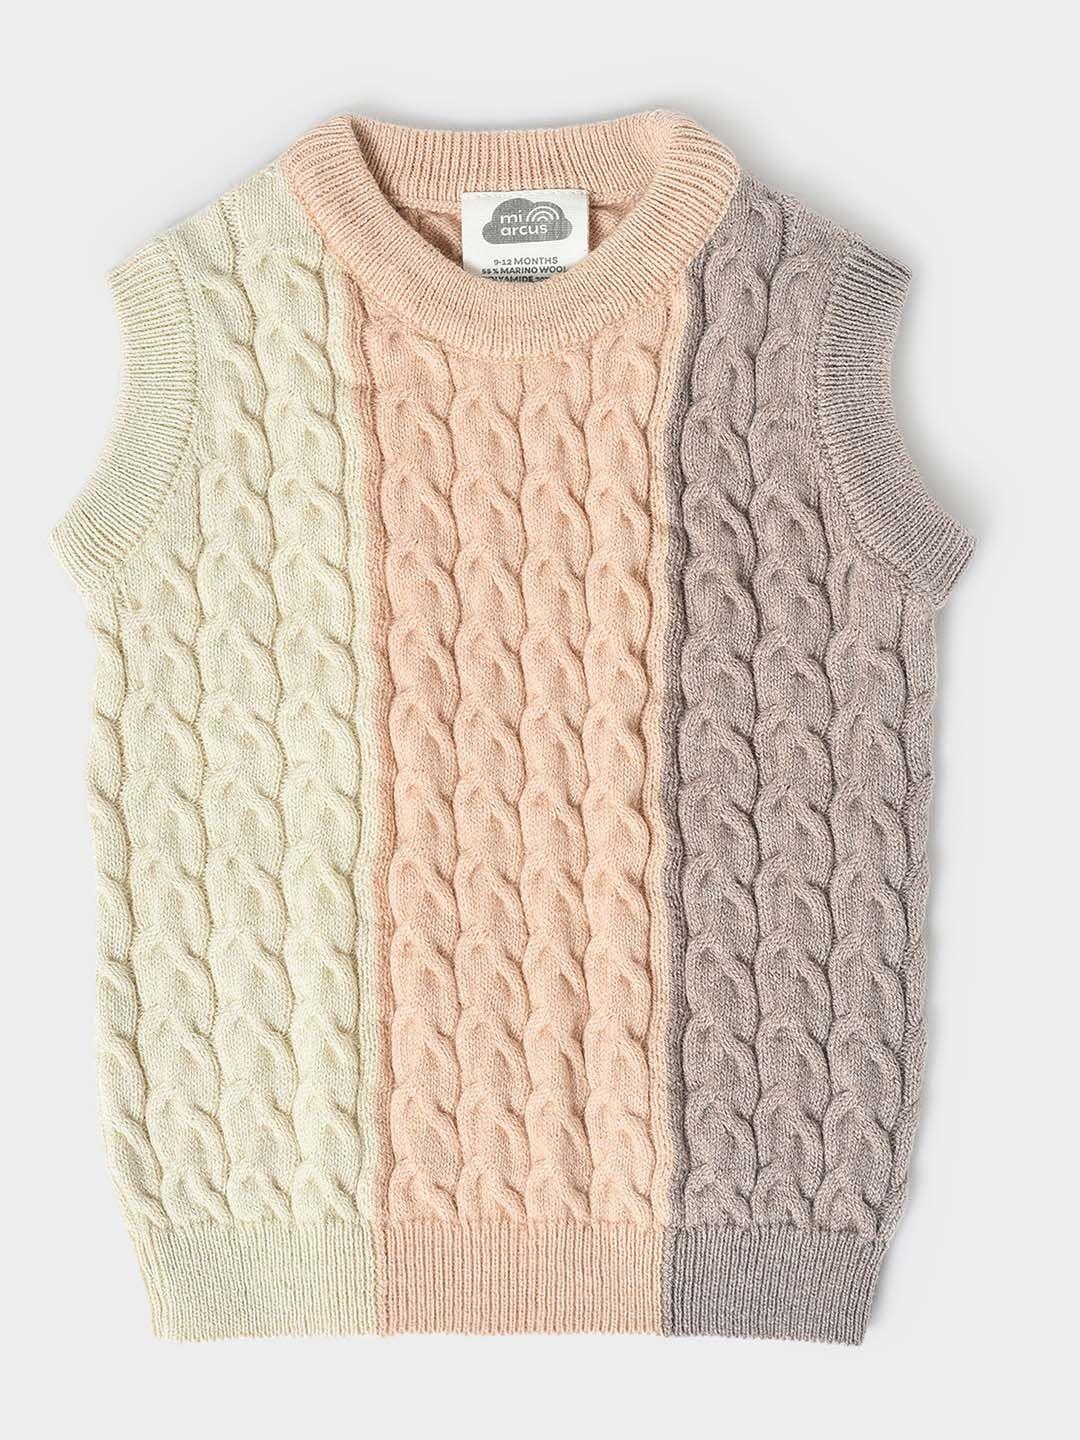 miarcus unisex kids cream-coloured & grey cable knit woollen sweater vest